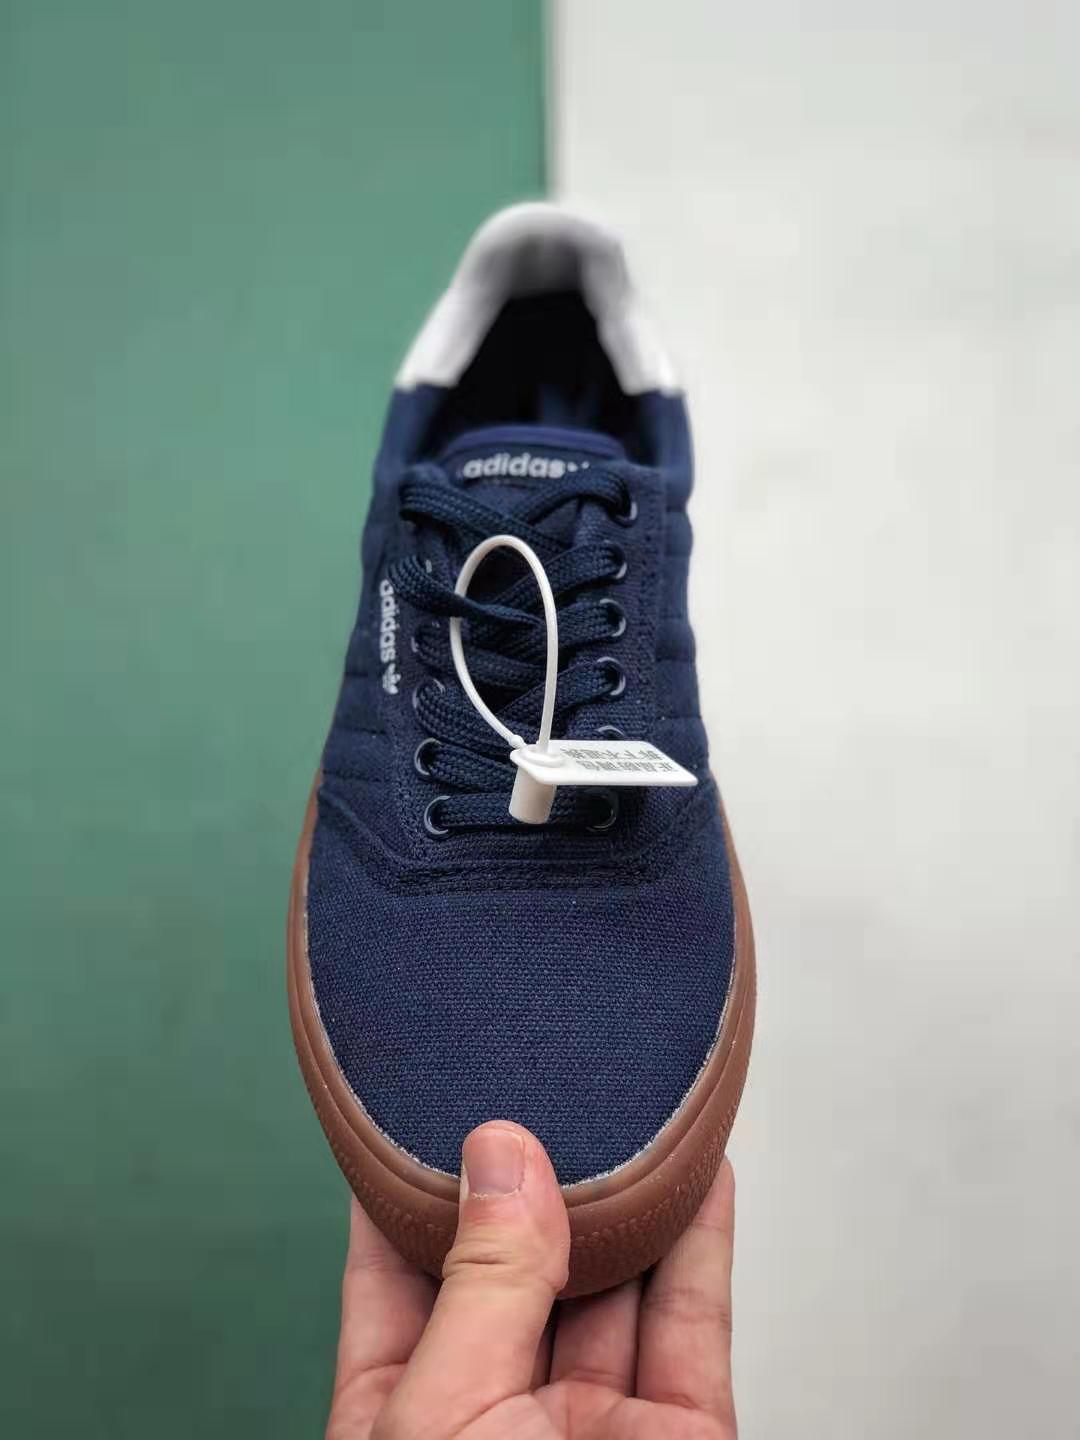 Adidas 3MC G54654 - Shop the Stylish and Versatile Skate Shoe